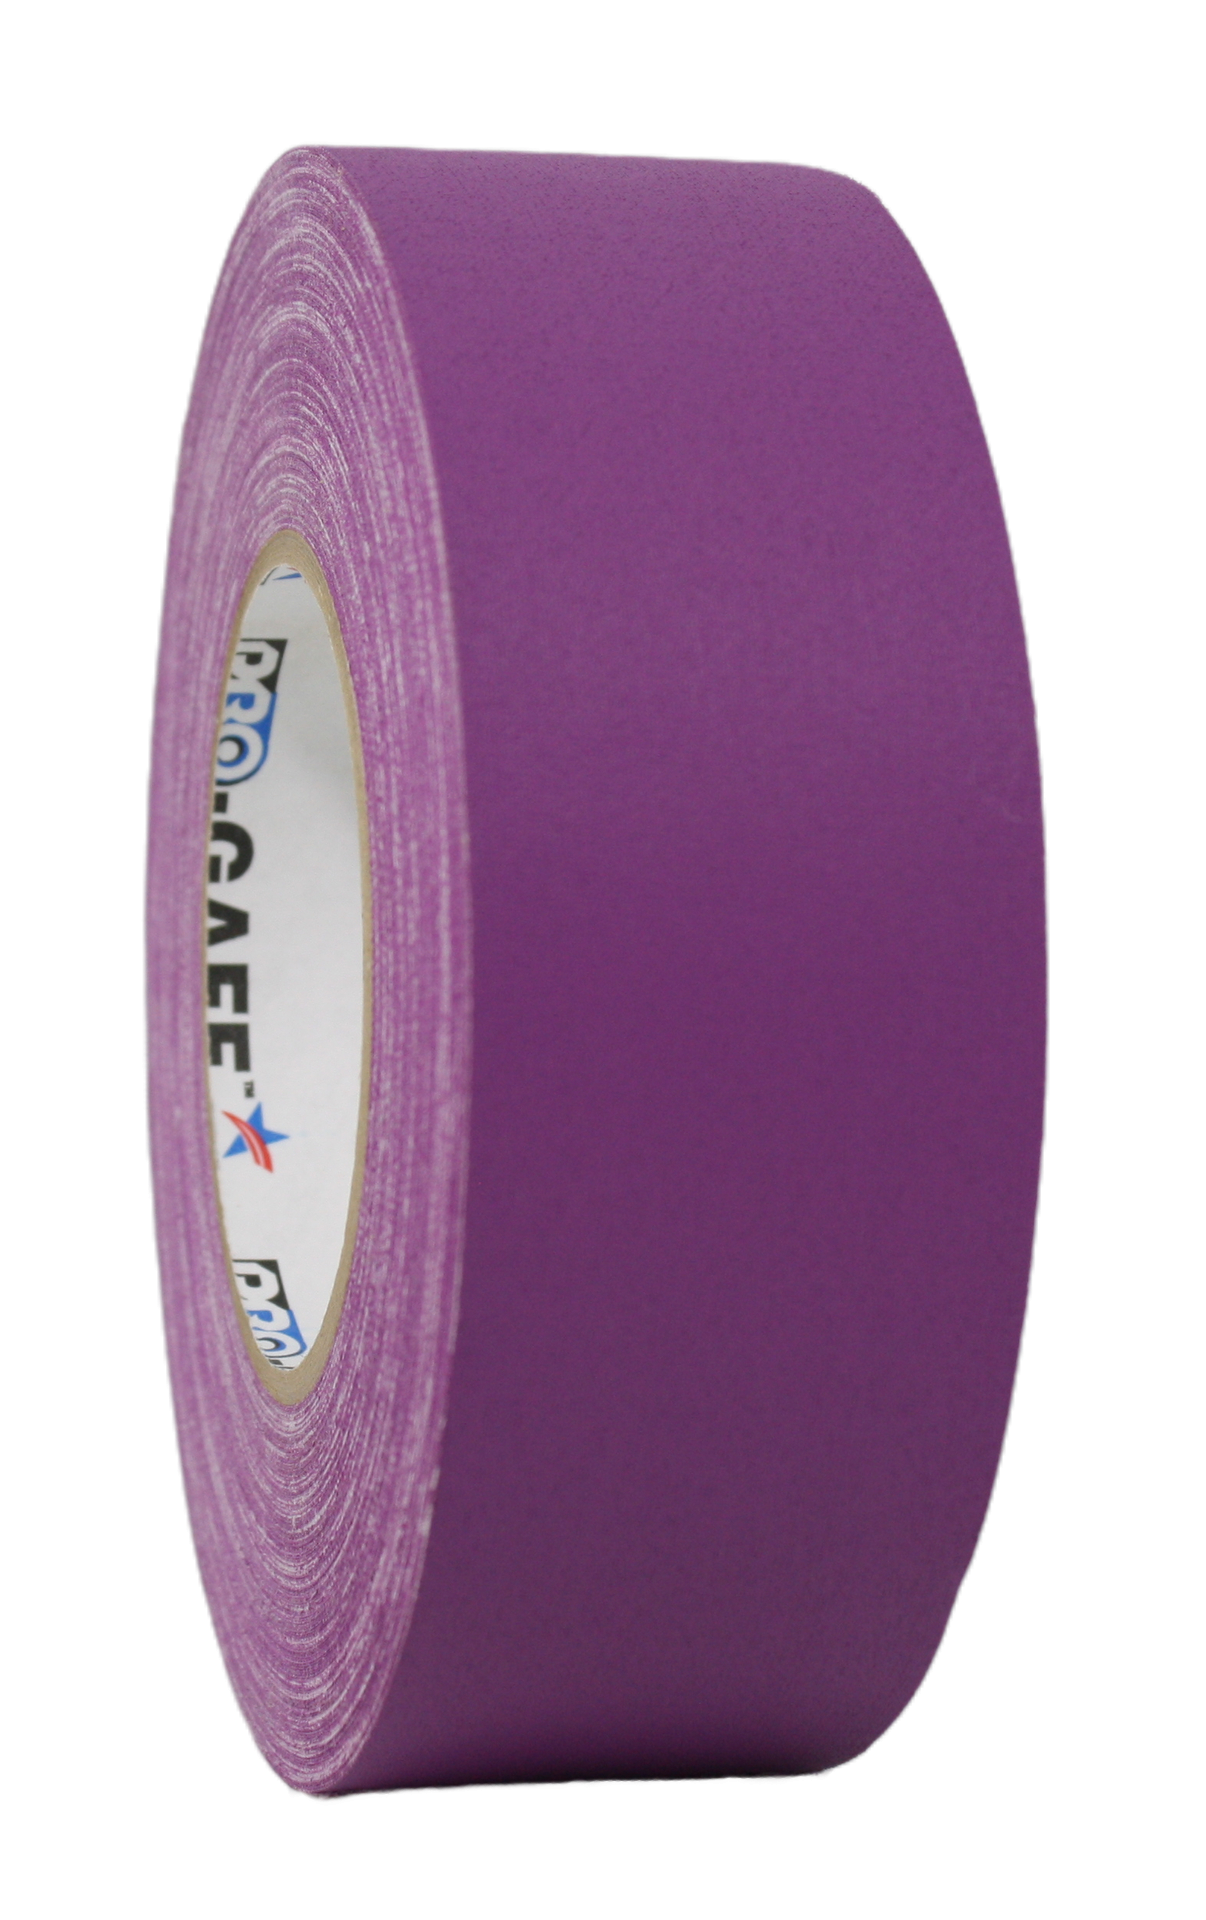 Pro Gaff 2" 50m roll, purple, side view